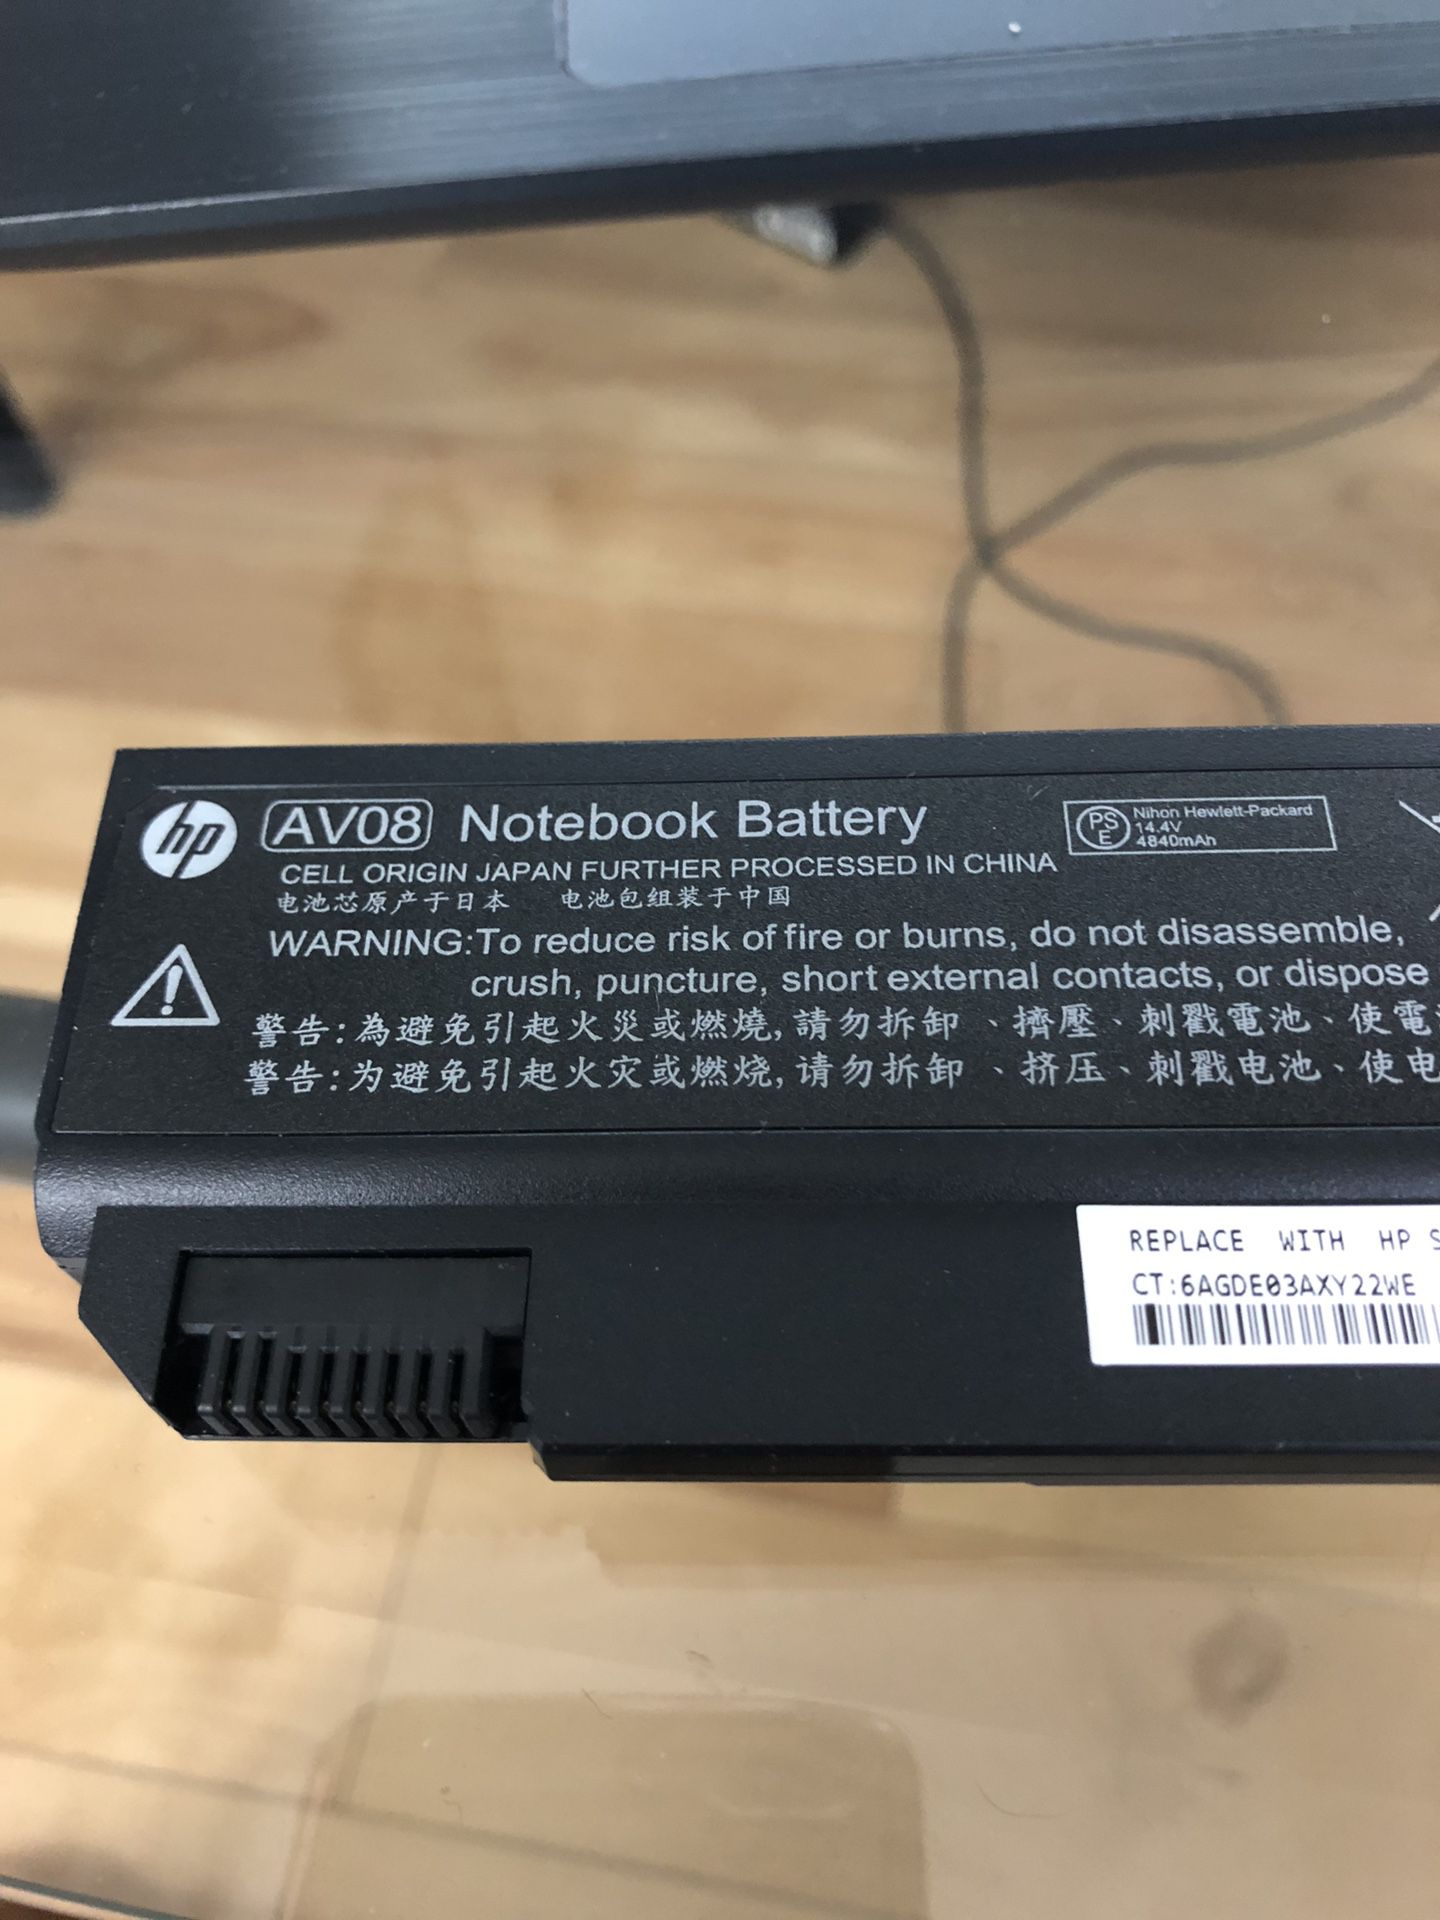 New replacement notebook battery HP AV08